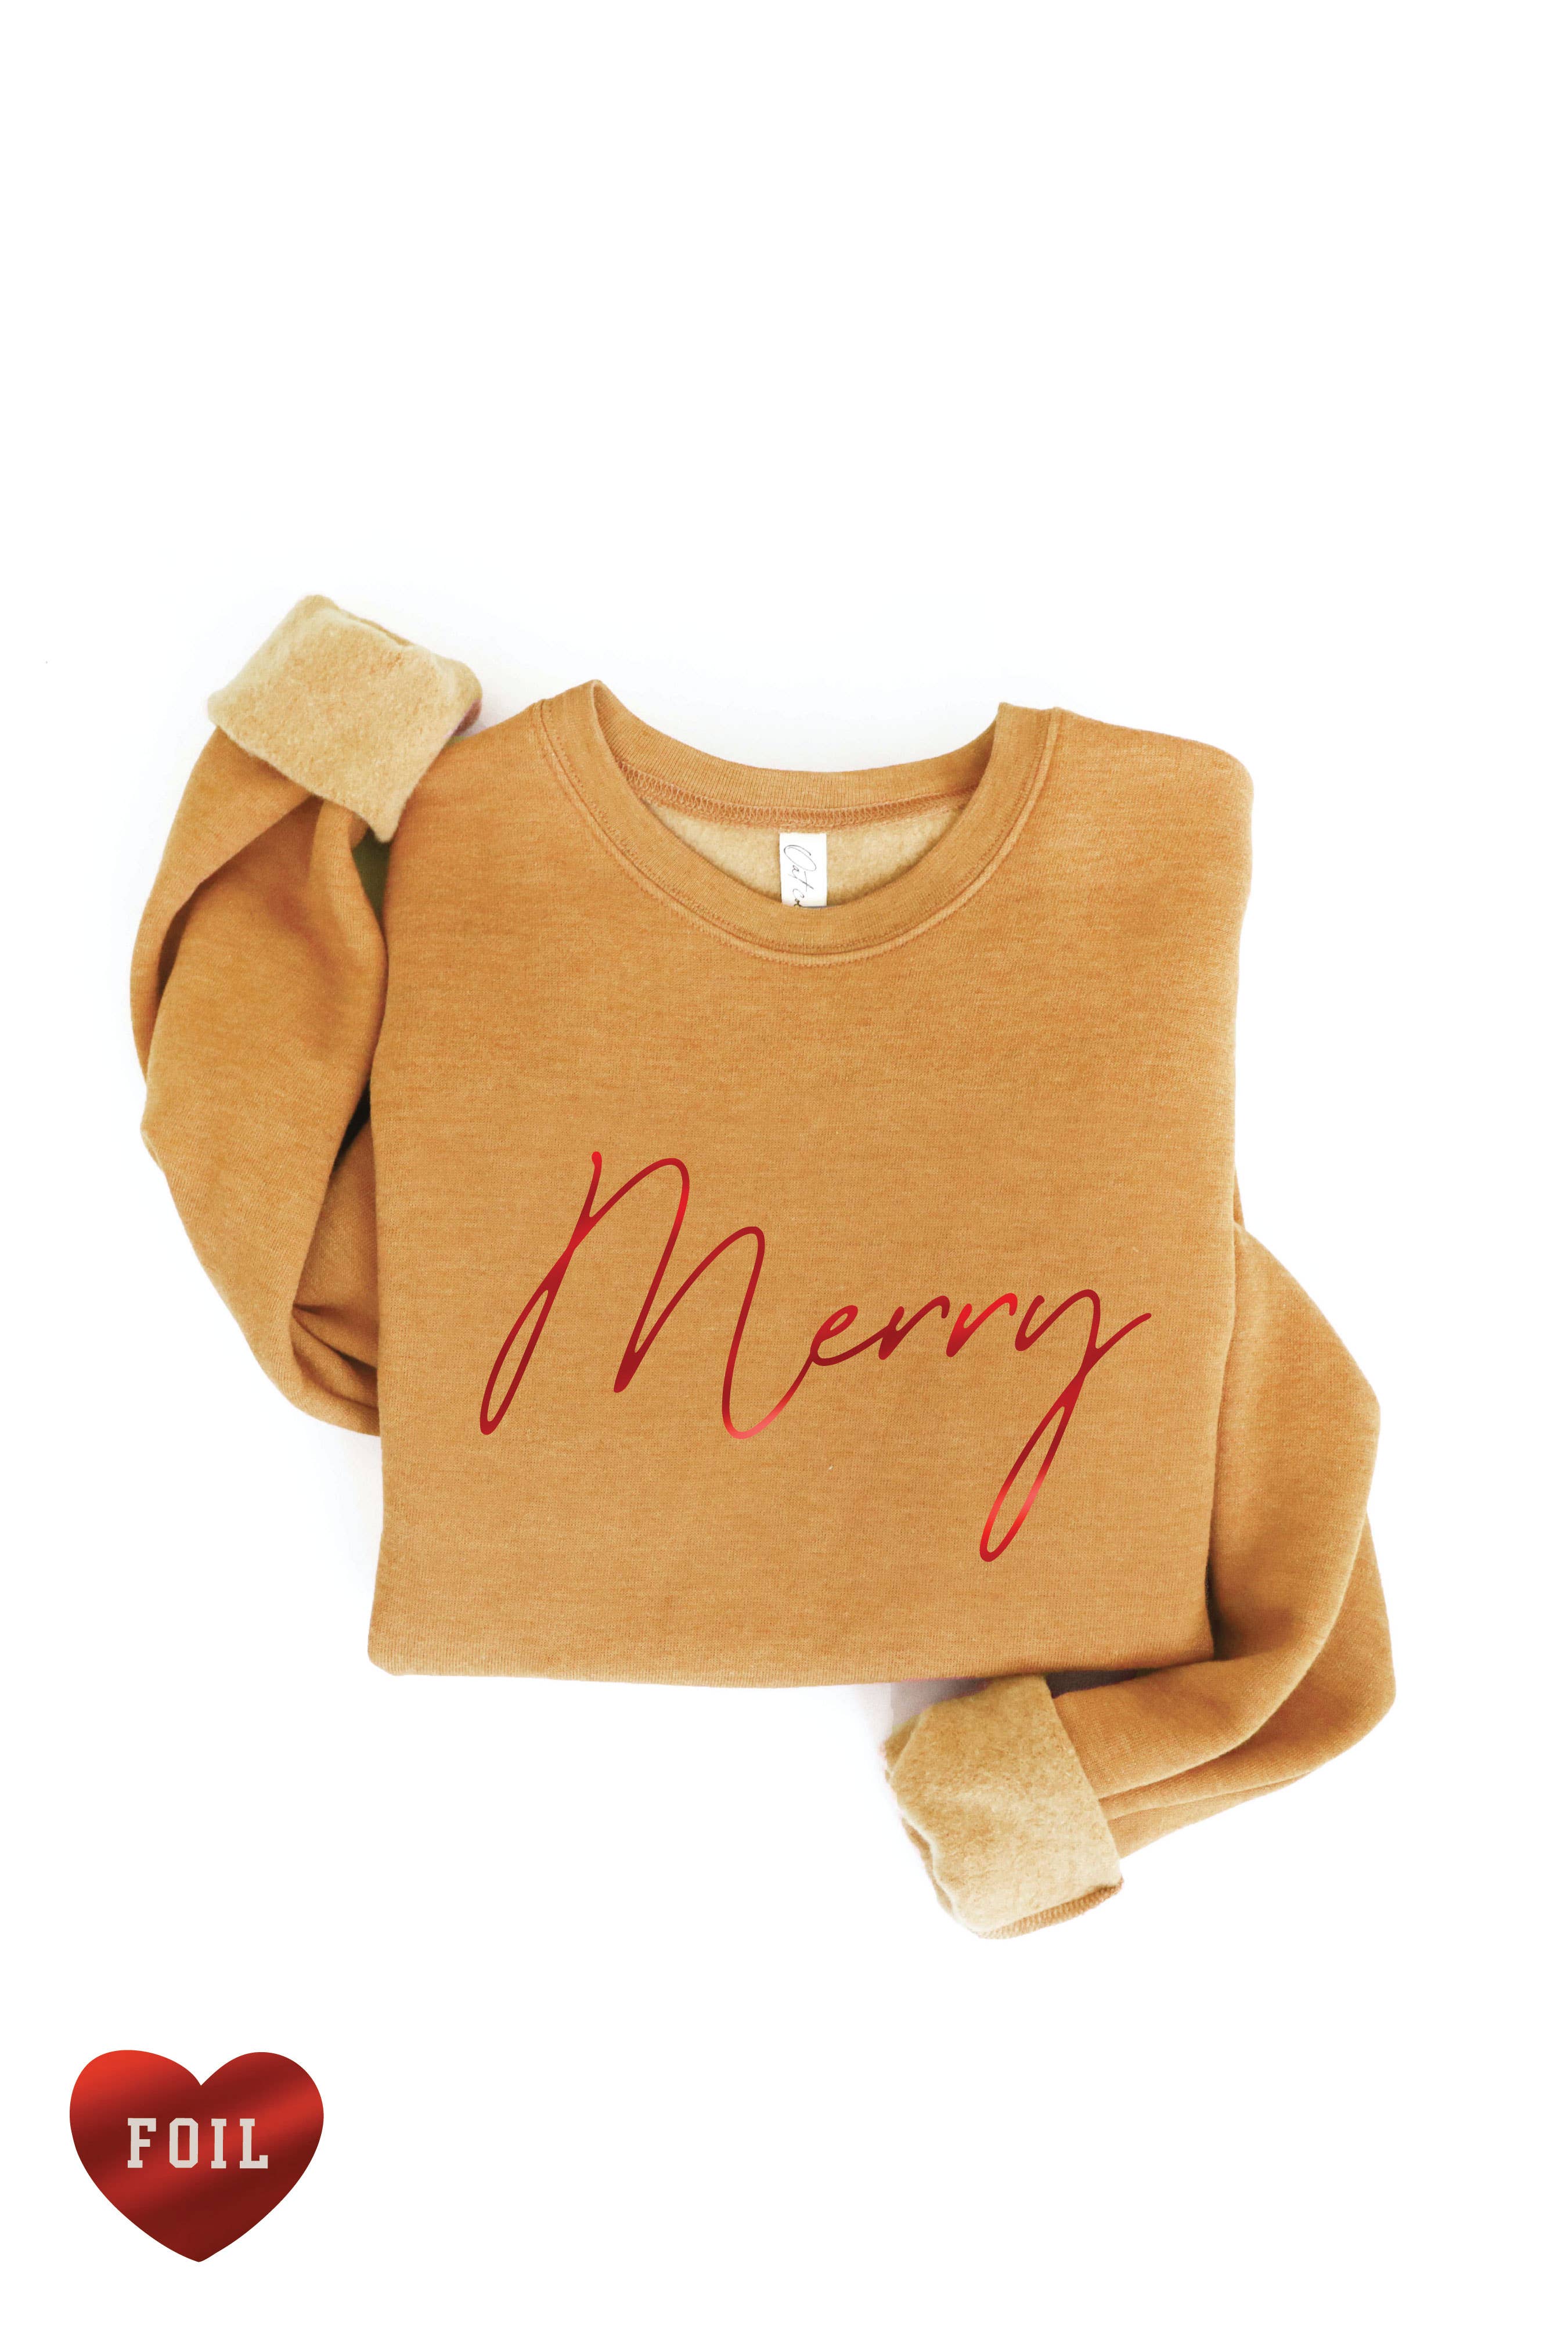 MERRY FOIL Graphic Sweatshirt: L / MAROON